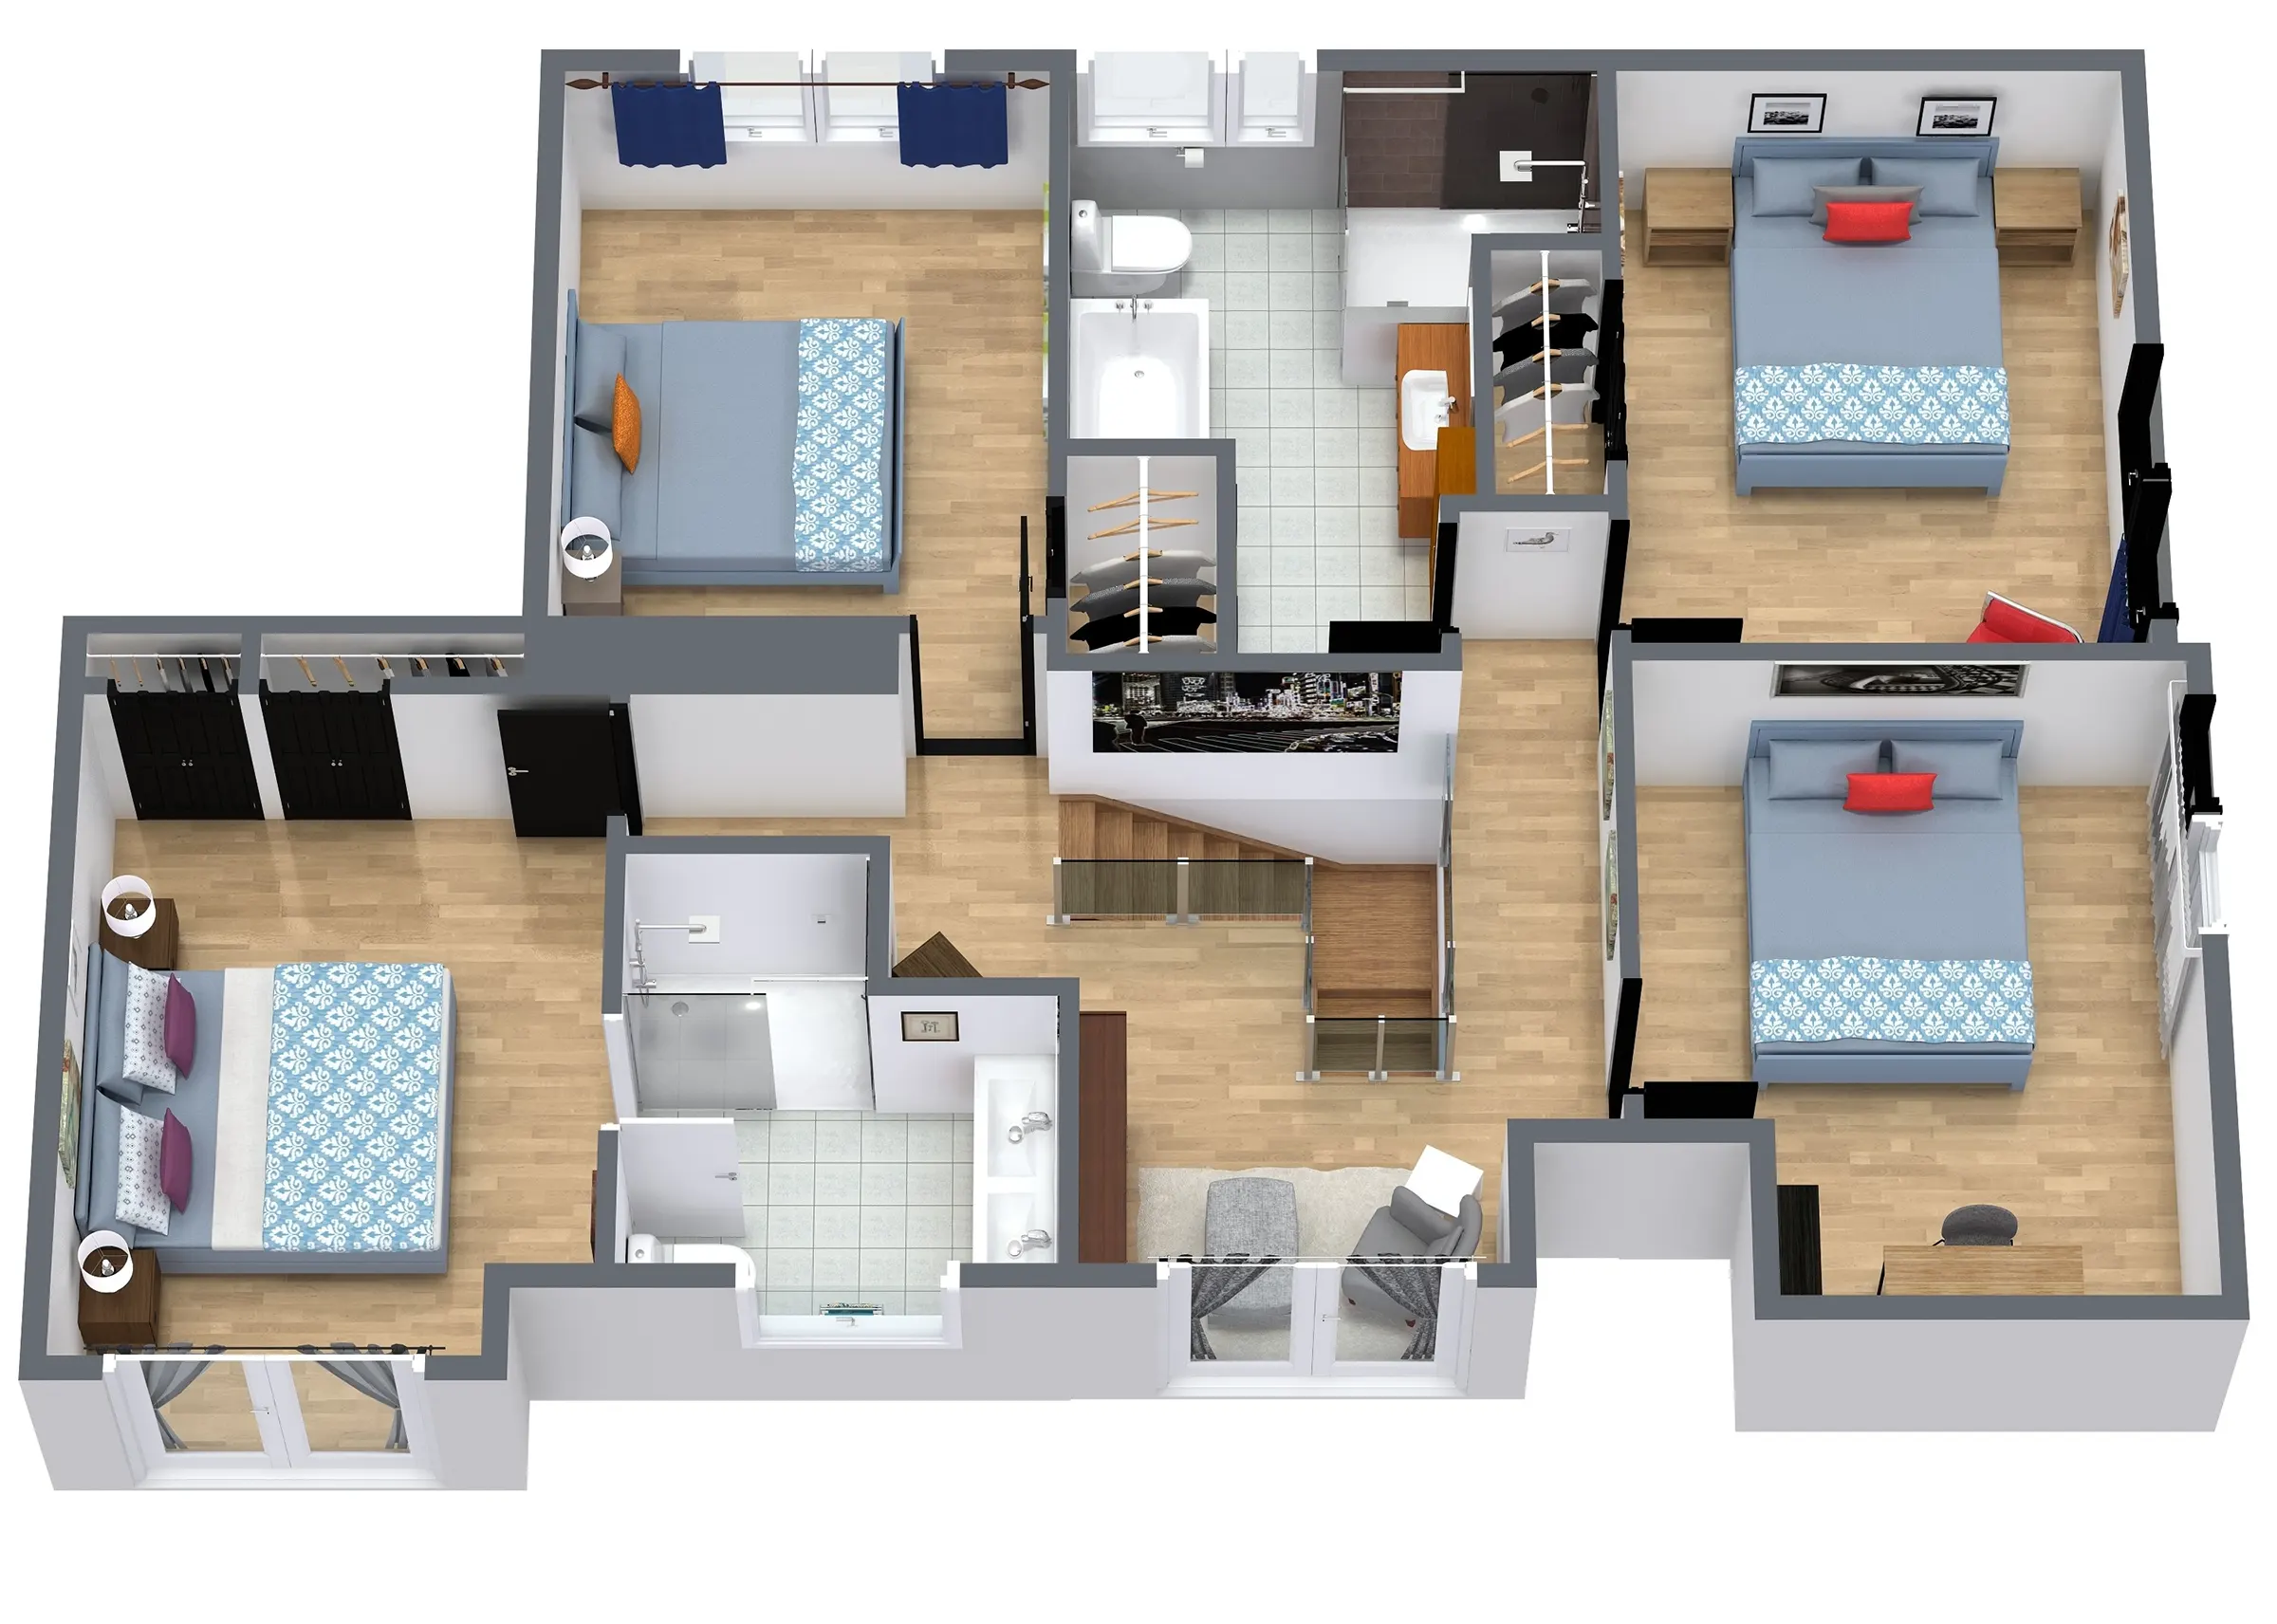 3D Floor Plan - Real Estate Floor Plan Editing Service